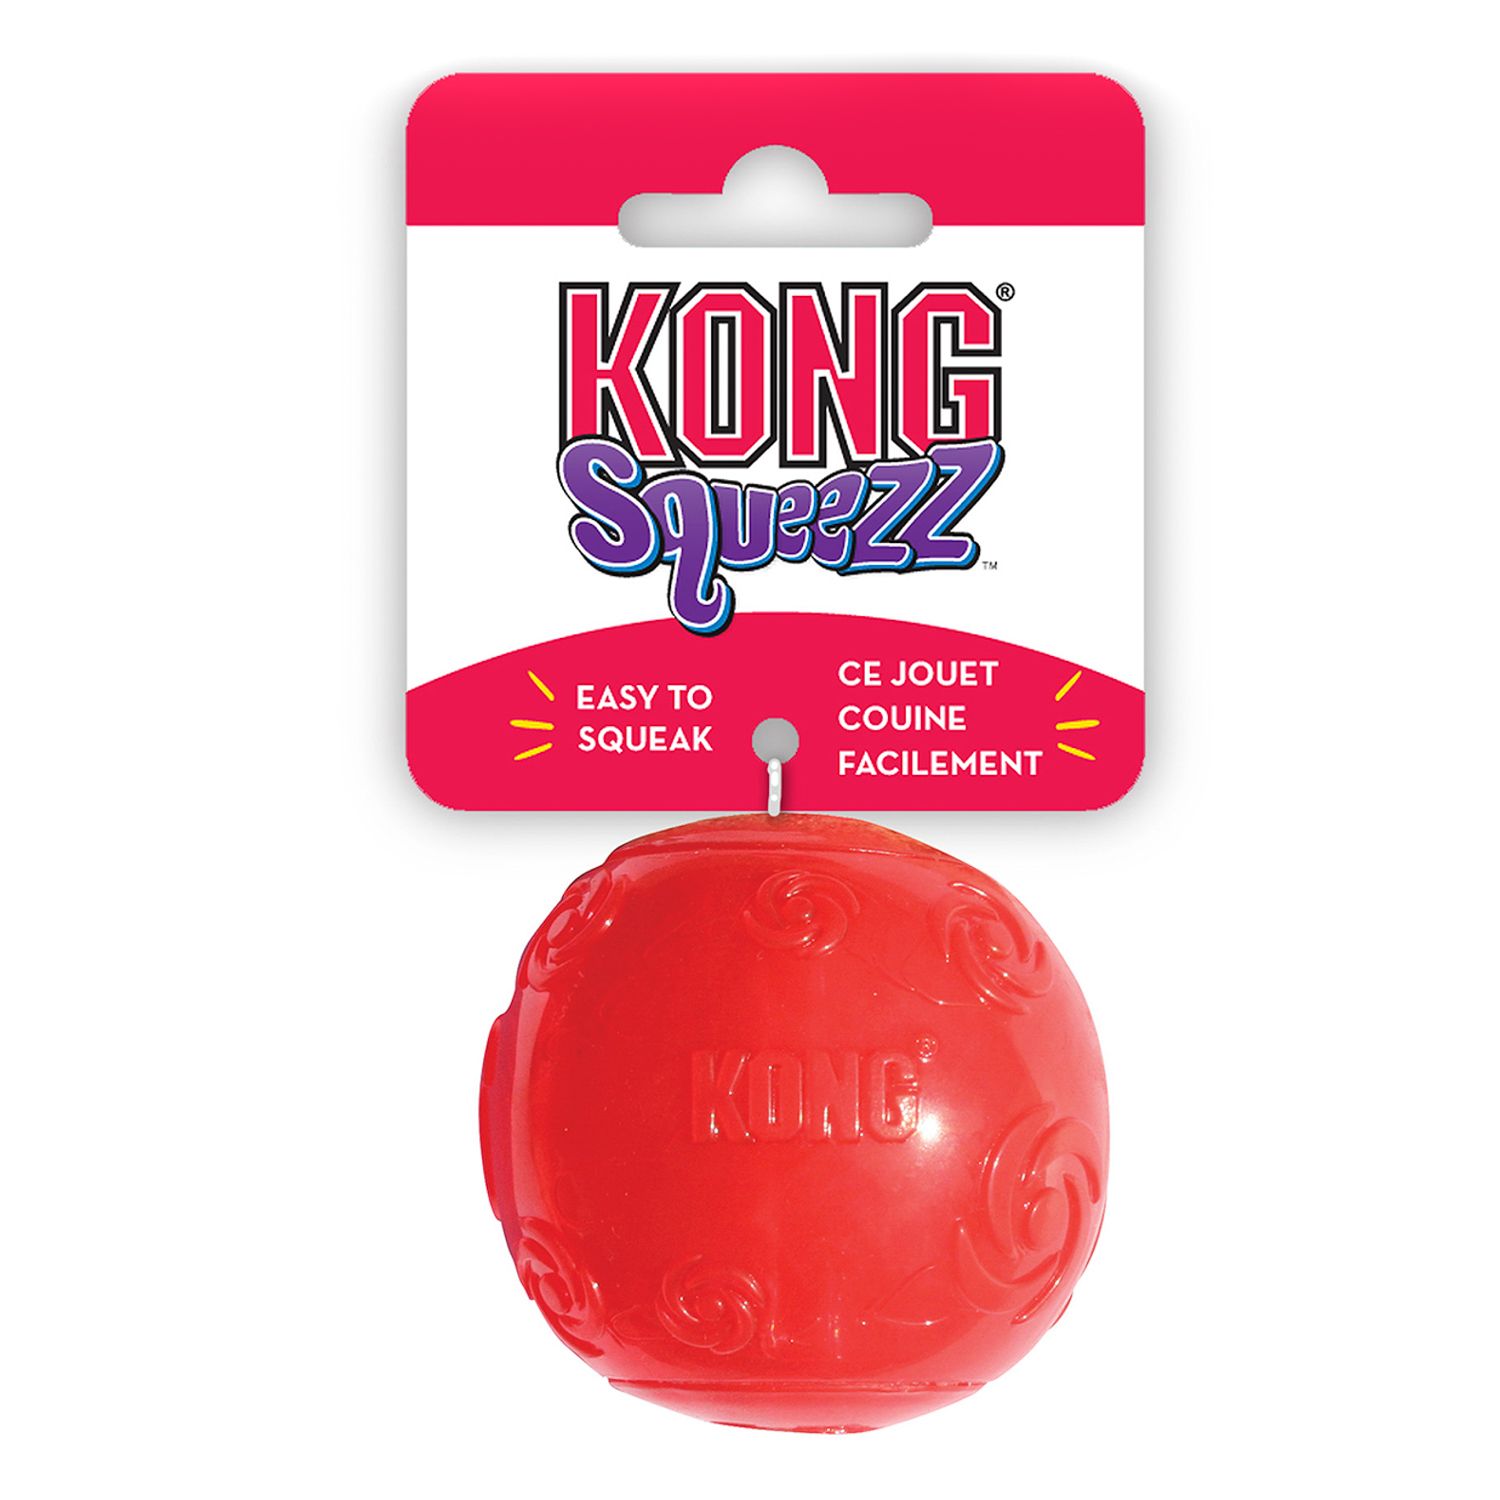 Kong company. Kong Squeezz Ball игрушка для собак. Kong игрушка для собак сквиз мячик средний. Kong игрушка для собак сквиз мяч средний резиновое с пищалкой. Kong игрушка "сквиз мячик средний" с пищалкой для собак.